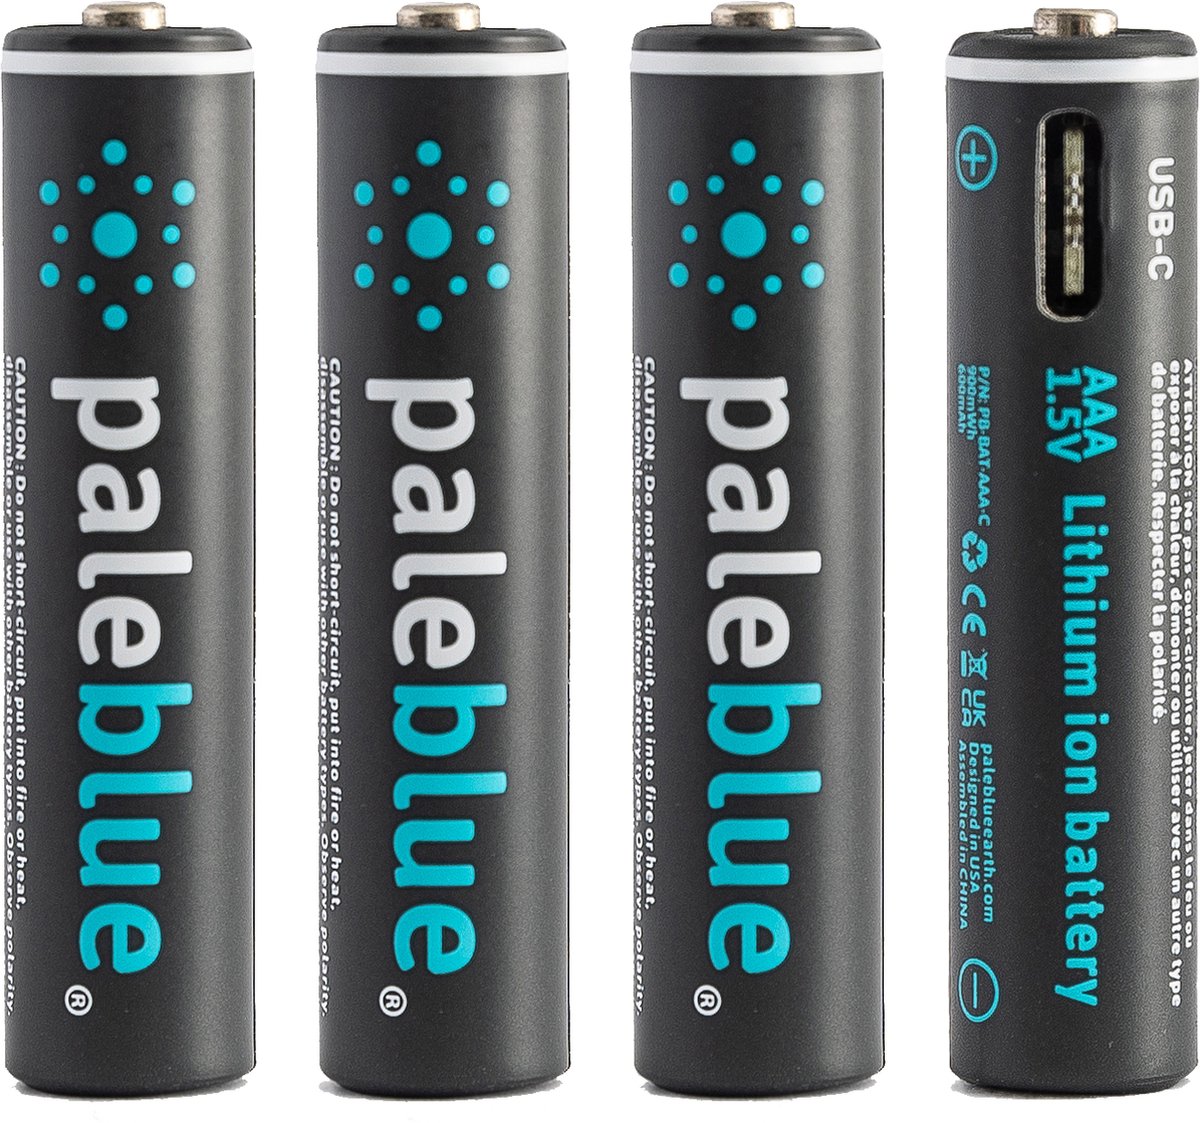 Pale Blue Earth - AAA USB-C oplaadbare batterijen (4x) - Lithium - lichter, sneller opladen, hoger vermogen, duurzaam - 1% for the planet